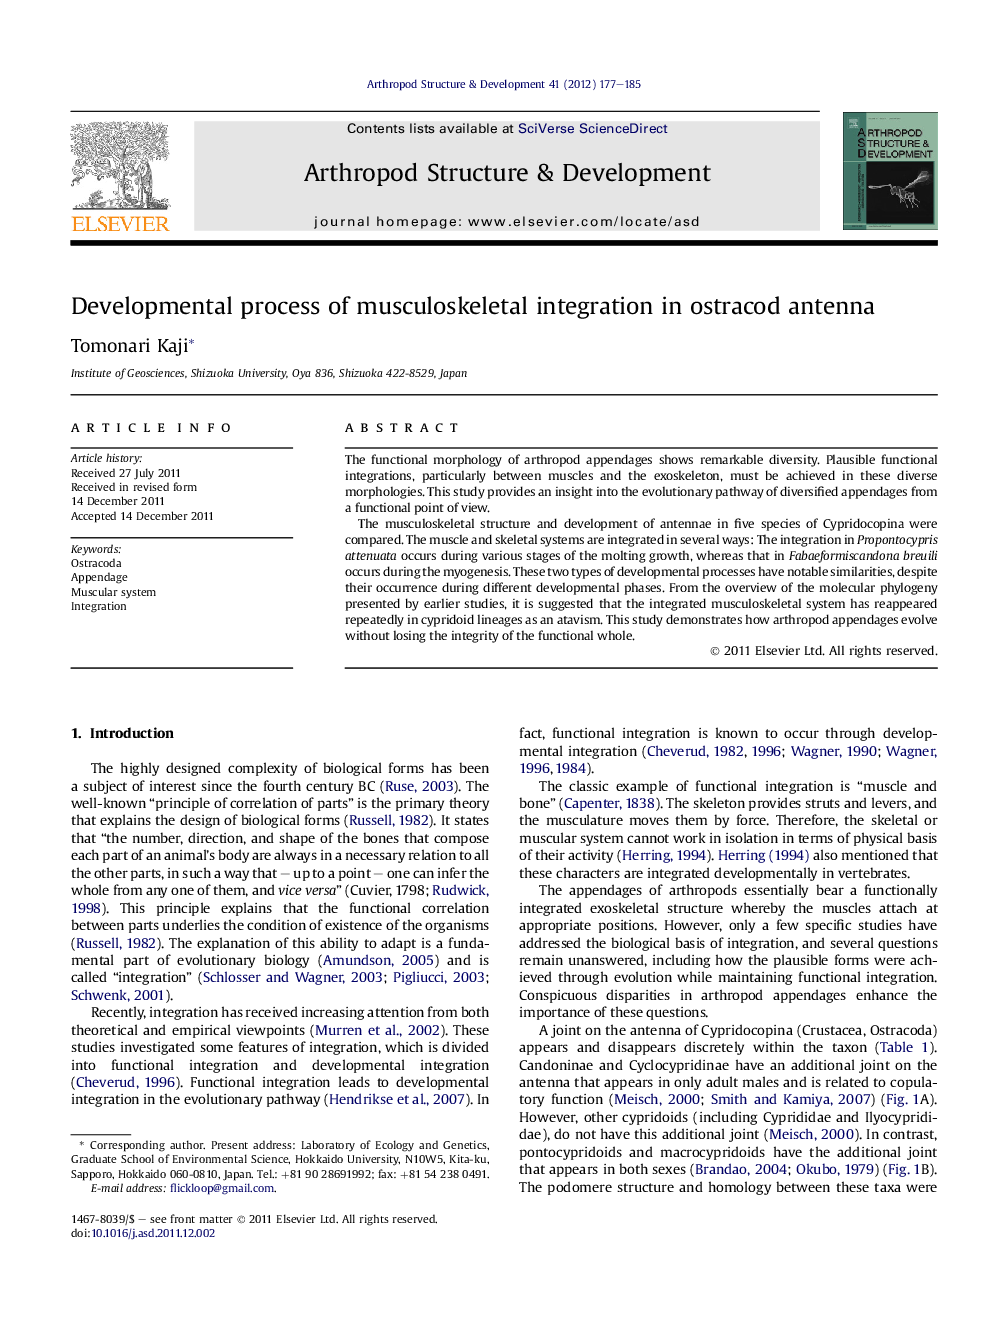 Developmental process of musculoskeletal integration in ostracod antenna